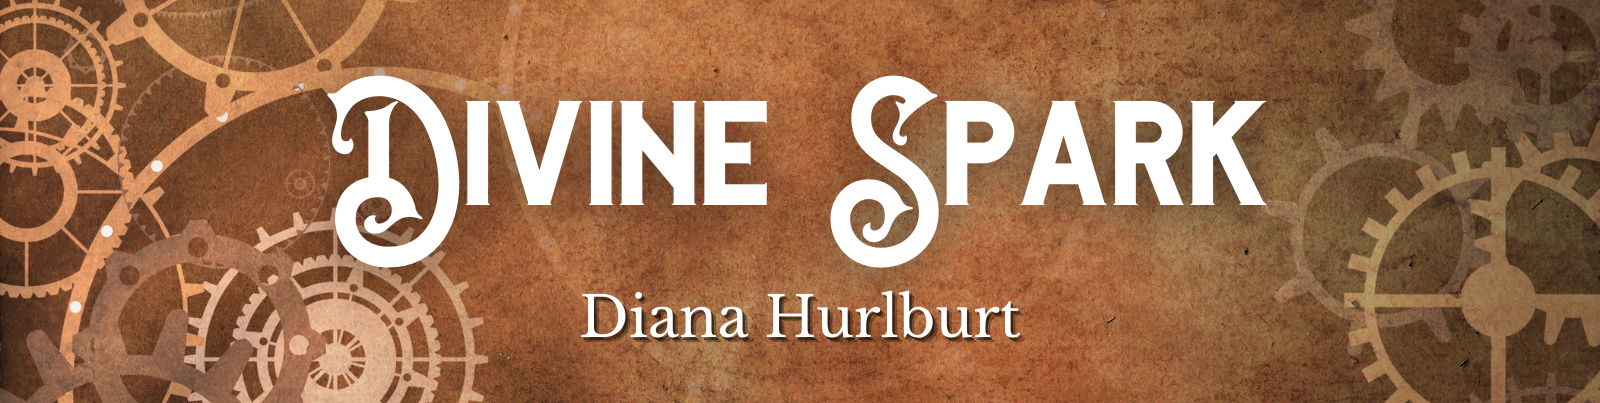 Divine Spark by Diana Hurlburt